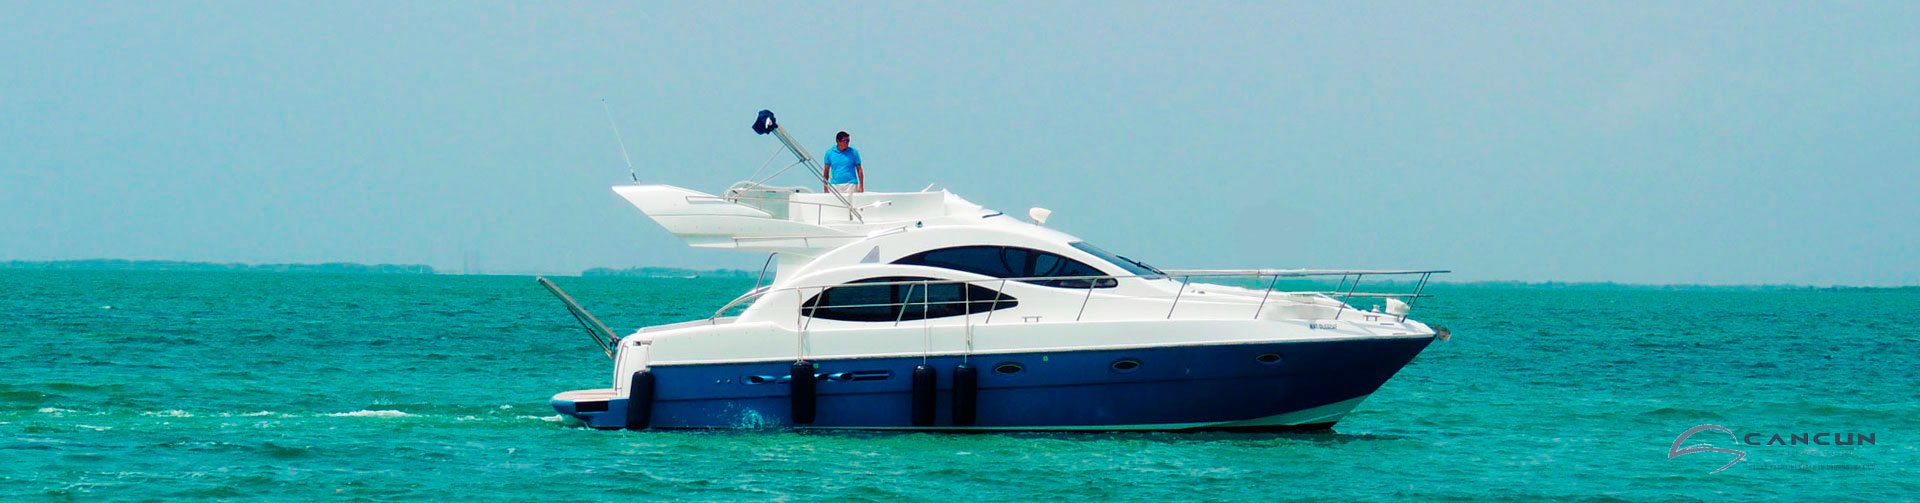 cancun yacht rentals